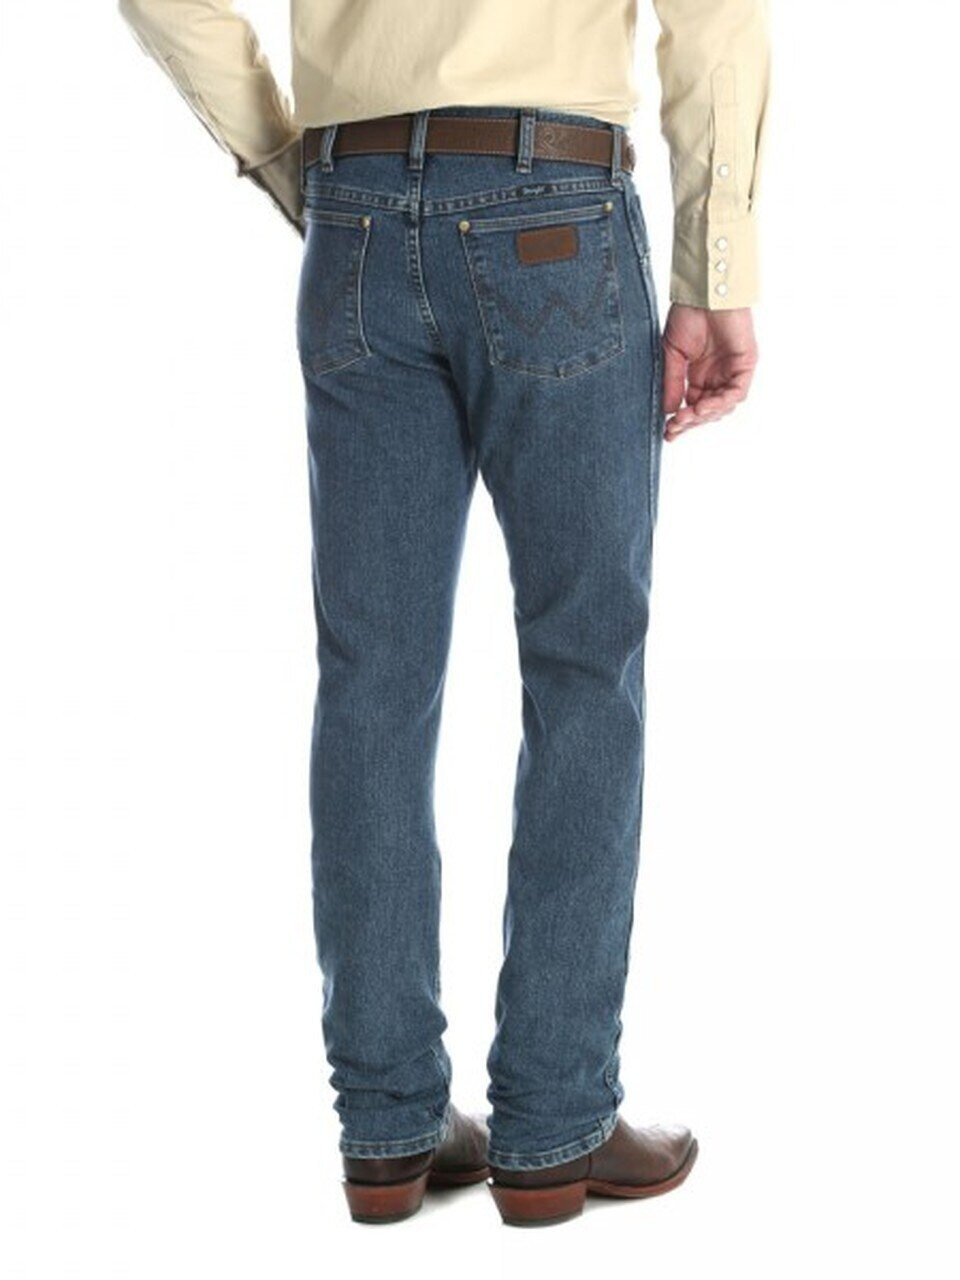 wrangler men's advanced comfort relaxed fit jeans